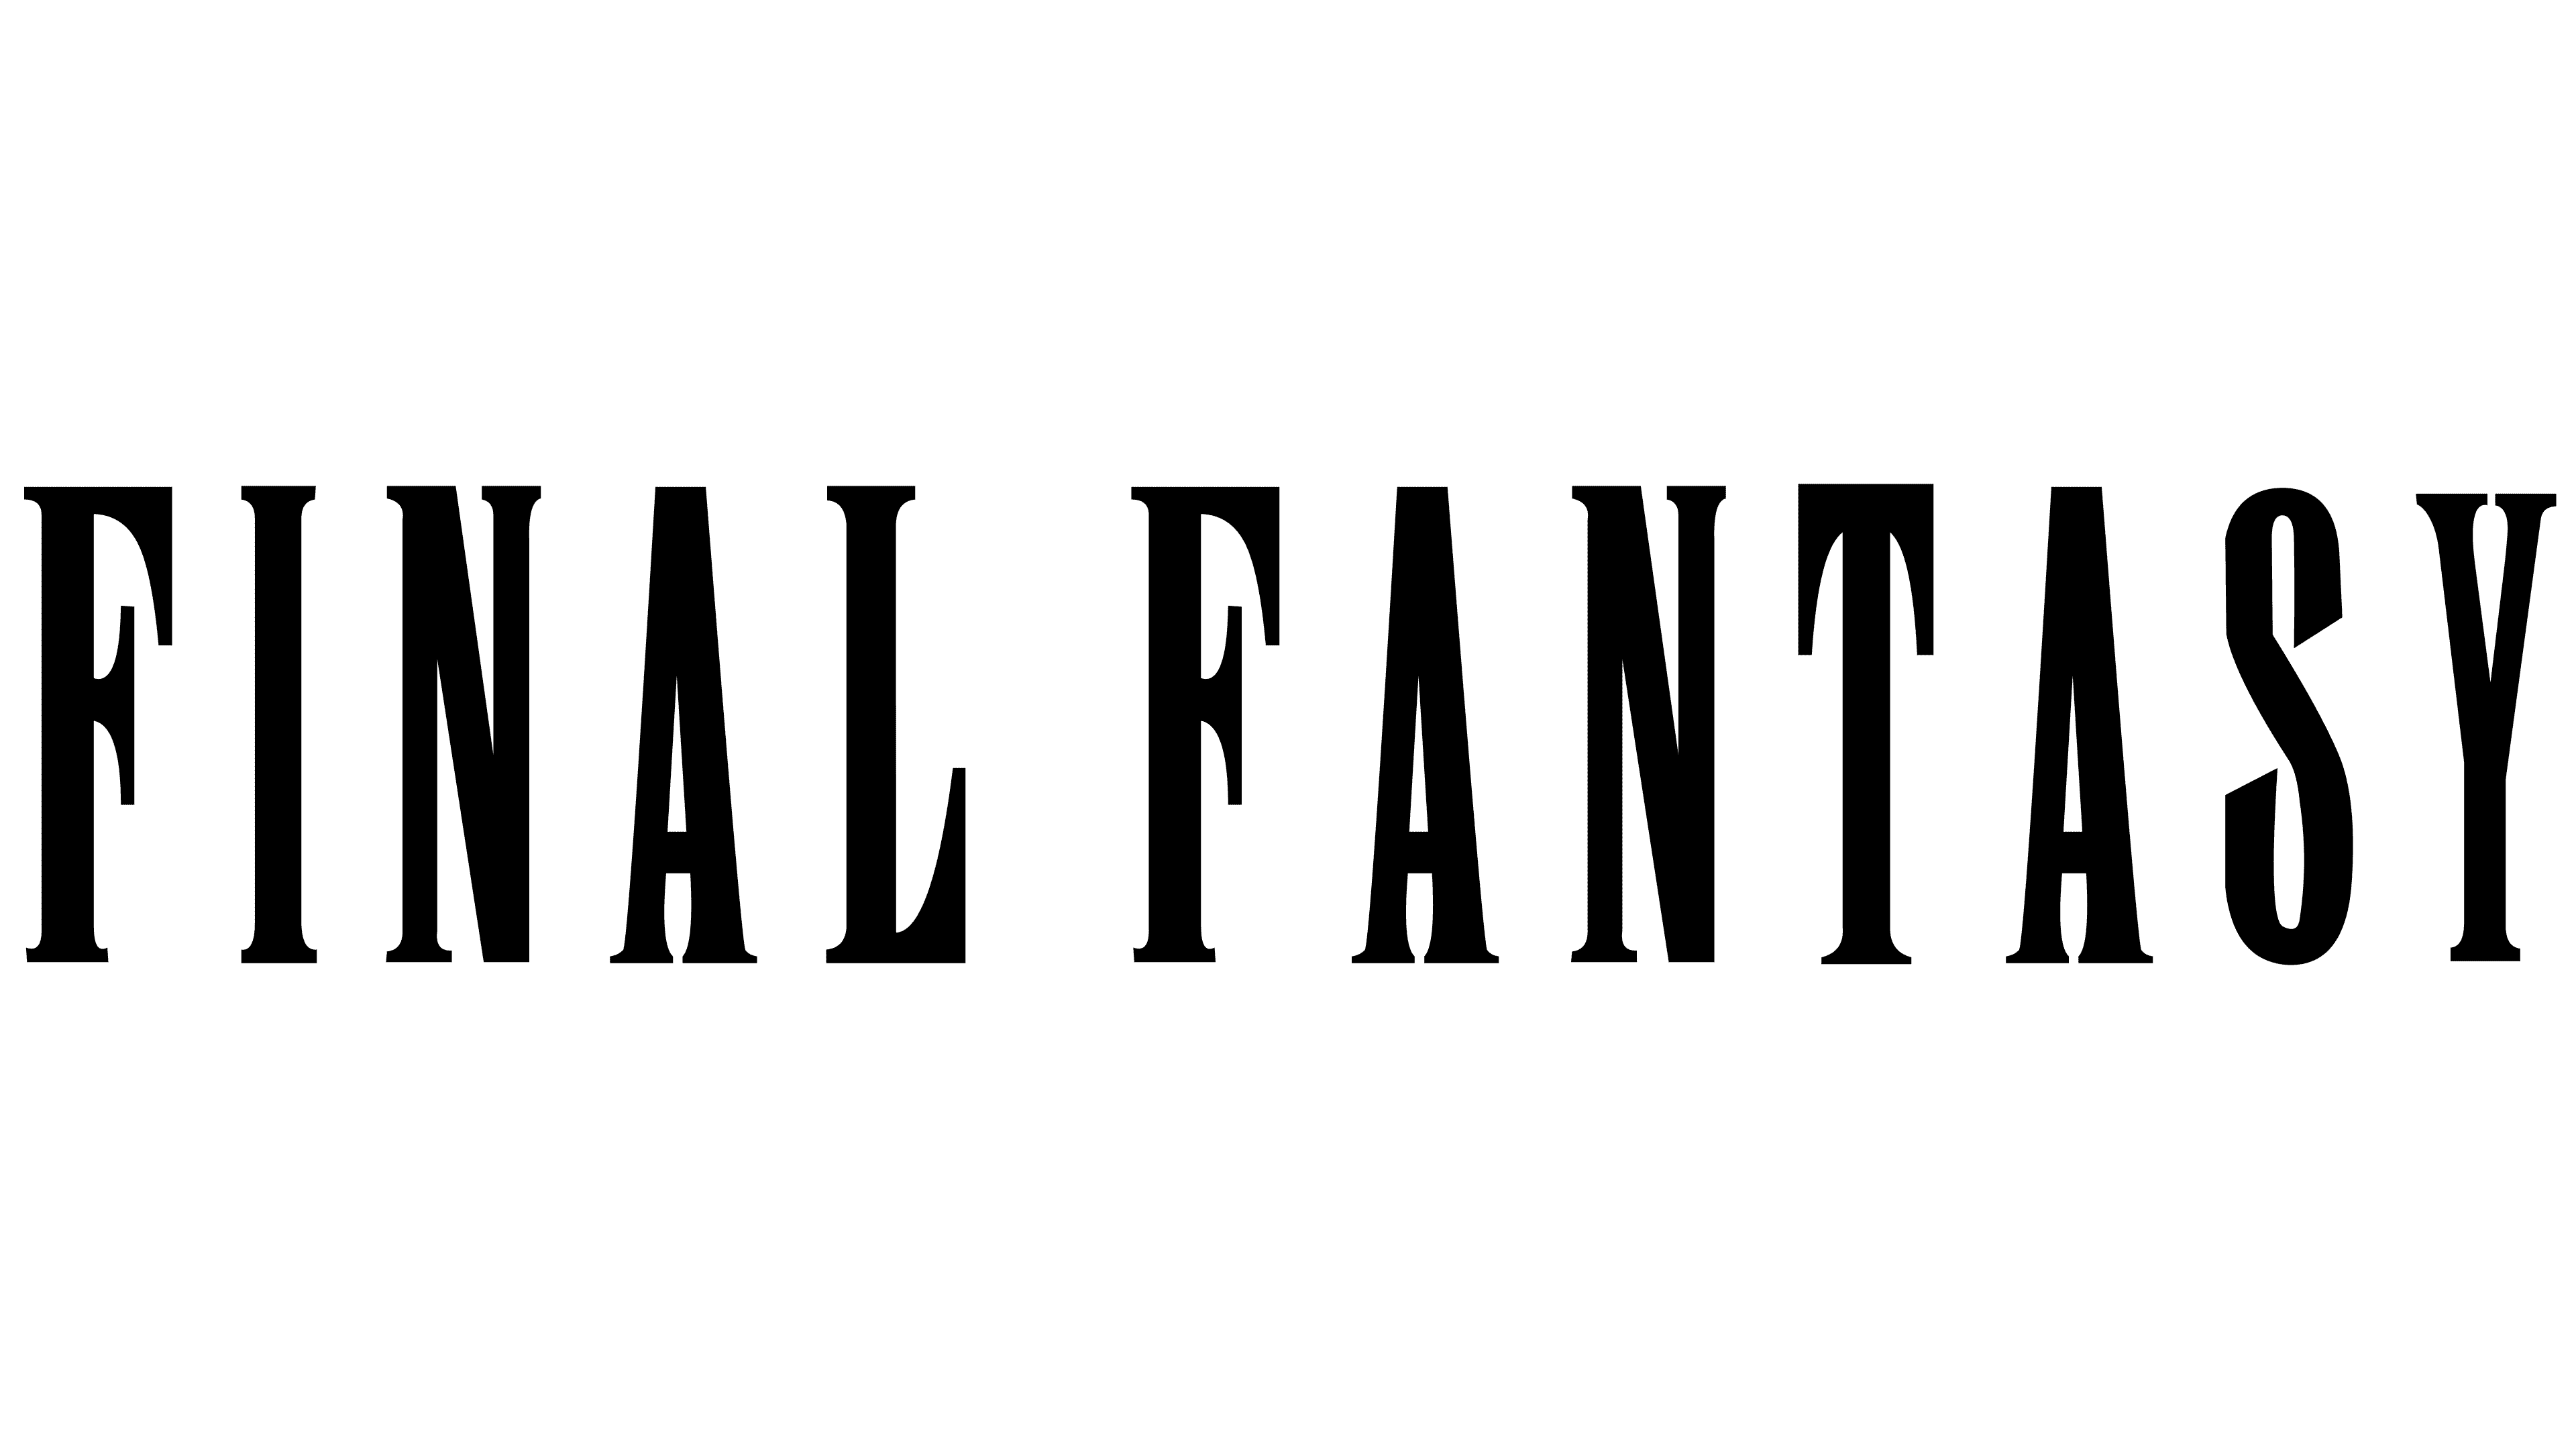 Square Enix Final Fantasy Black Washi Tape W/Symbols